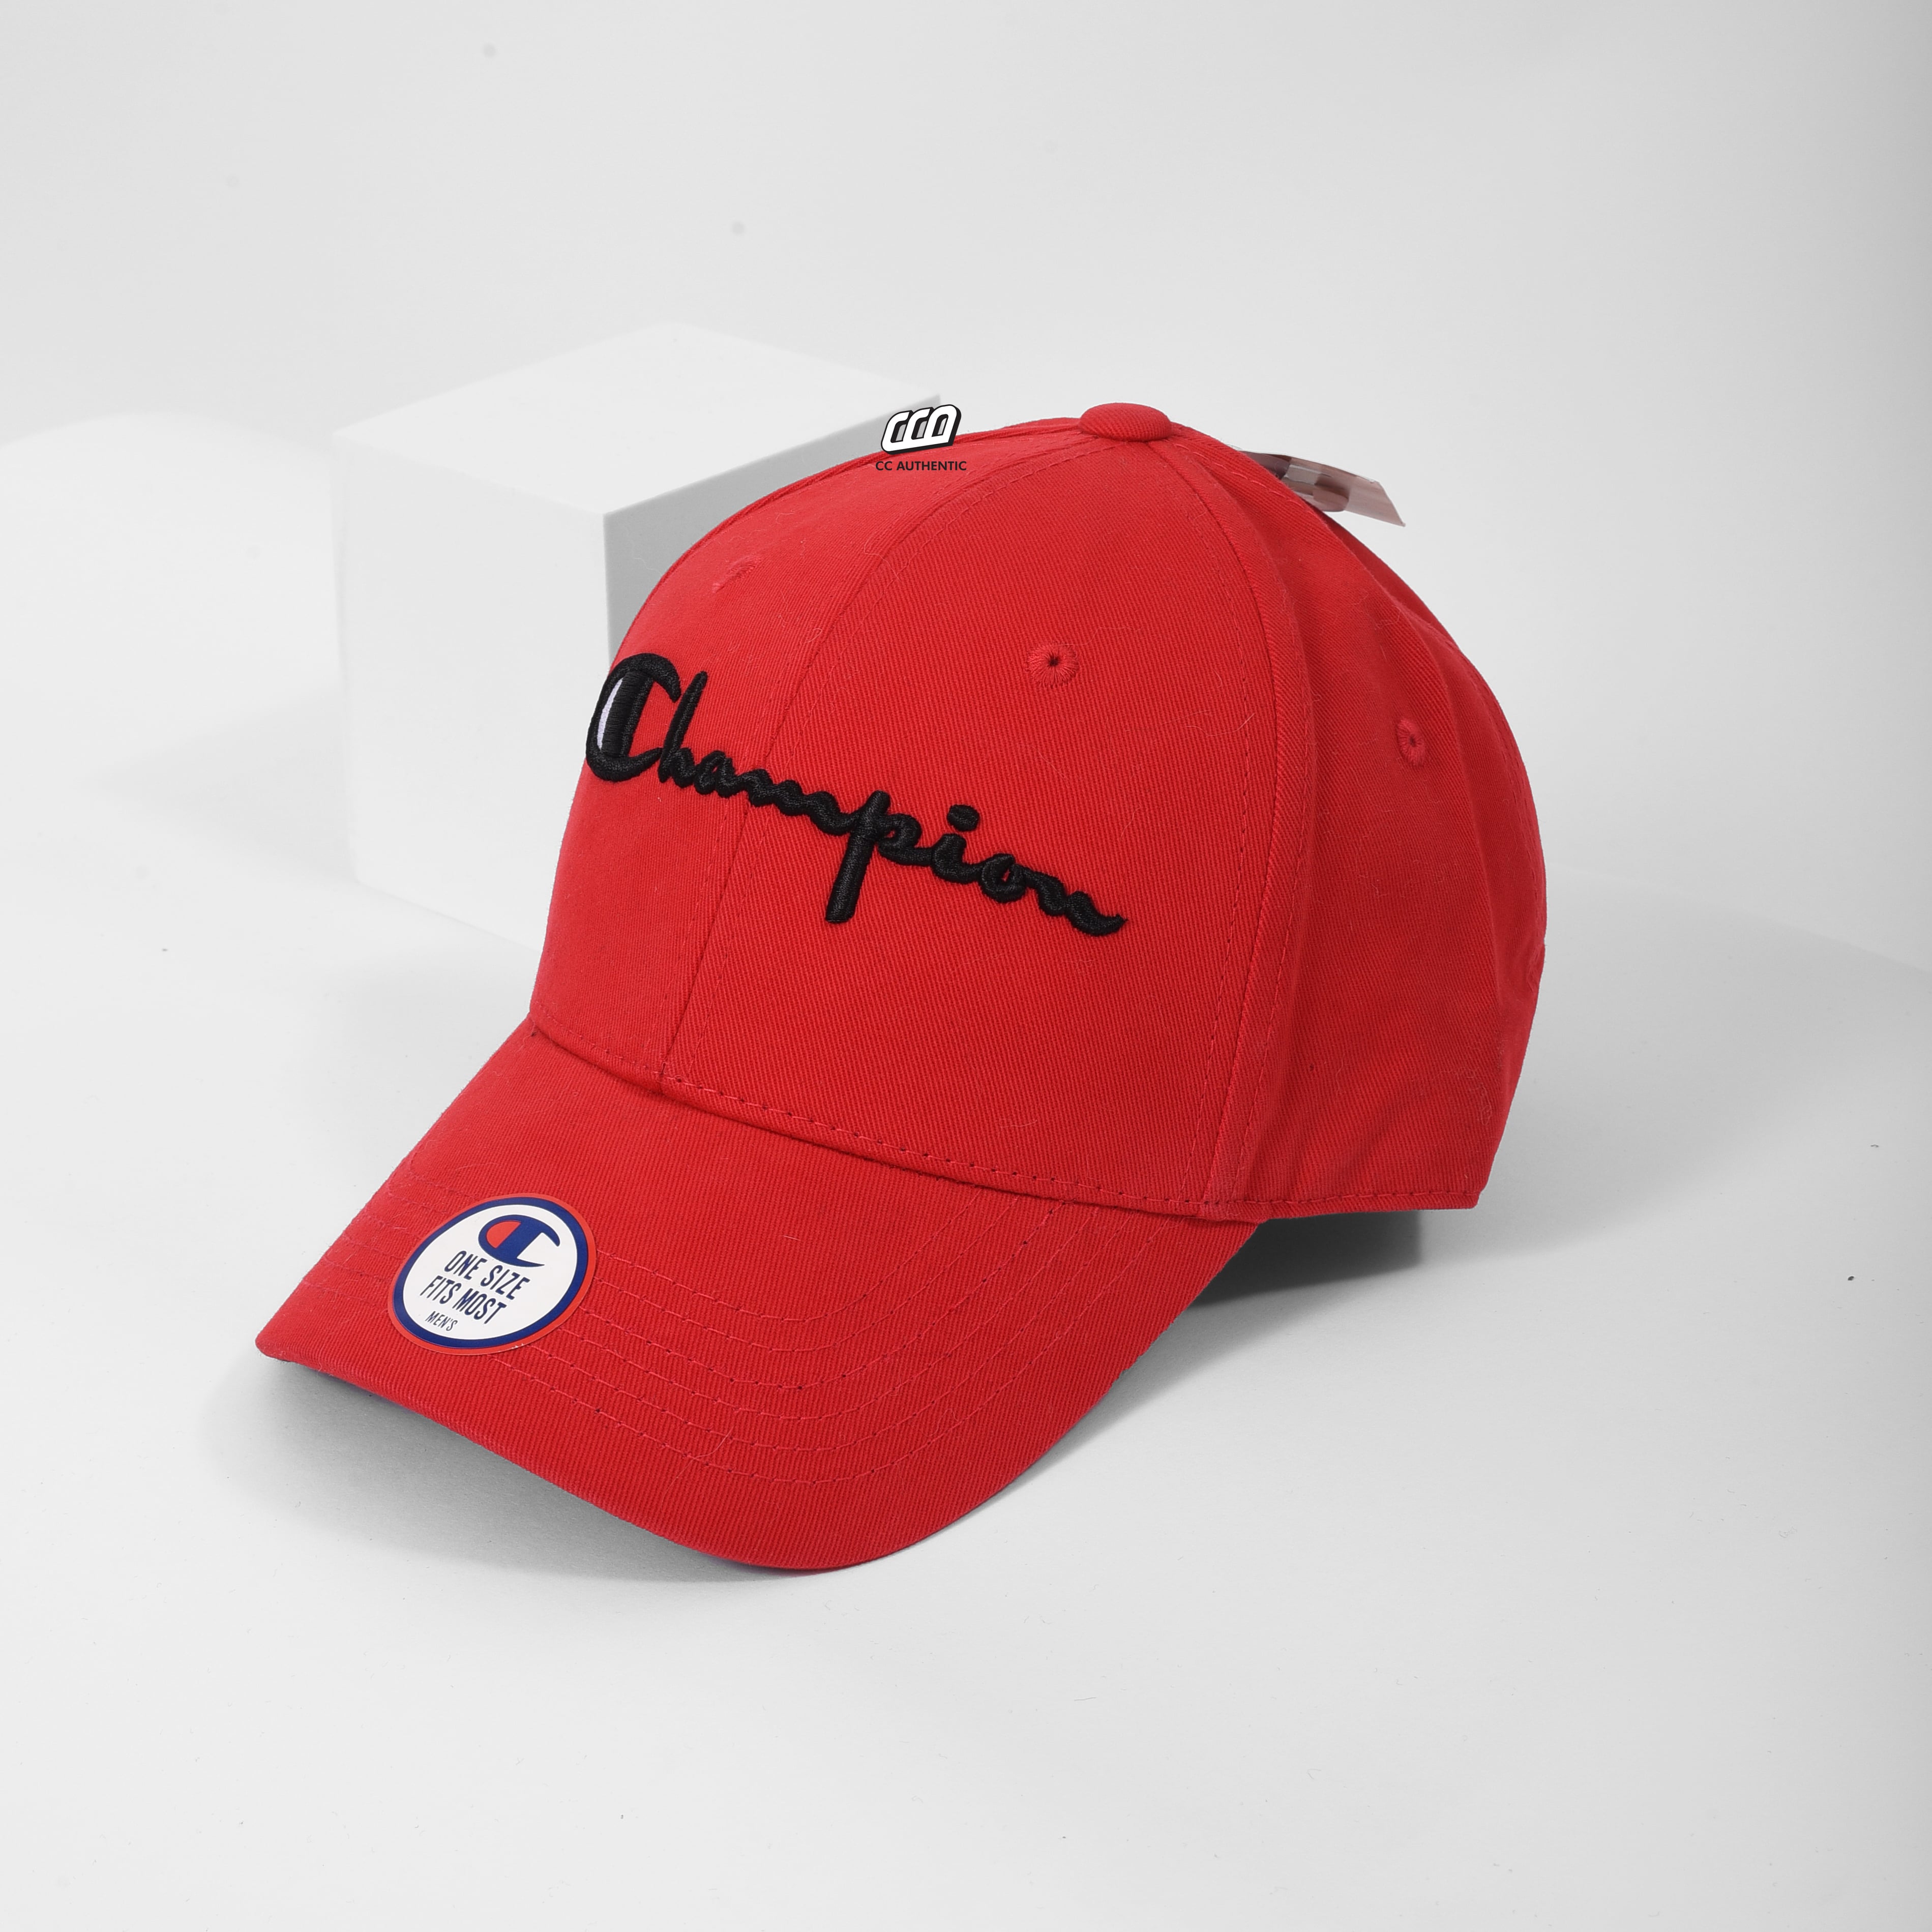 CHAMPION CLASSIC TWILL SCARLET STRAPBACK HAT